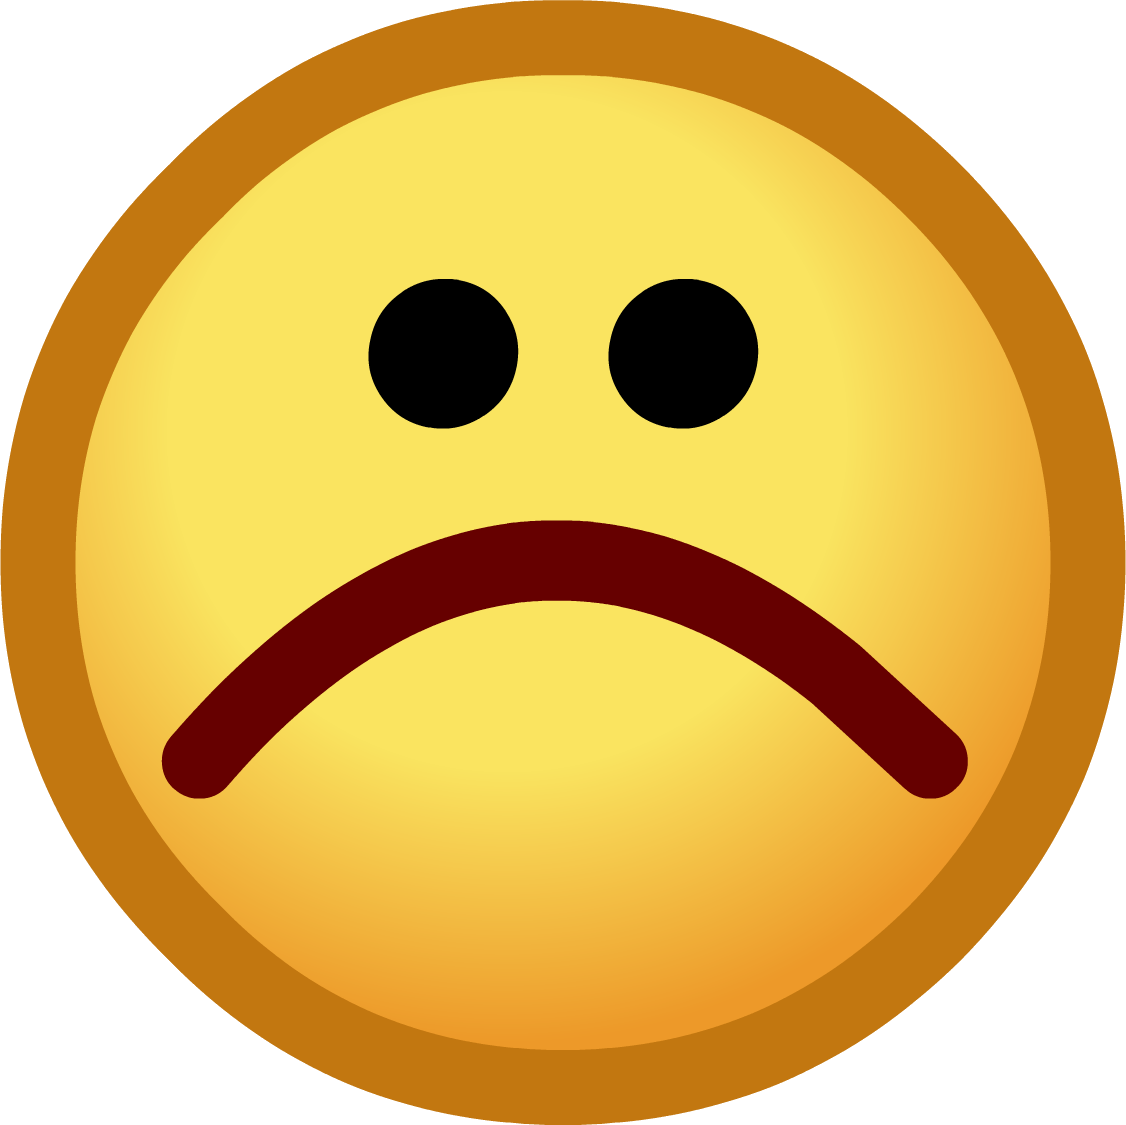 Download PNG image - Sad Emoji PNG Picture 